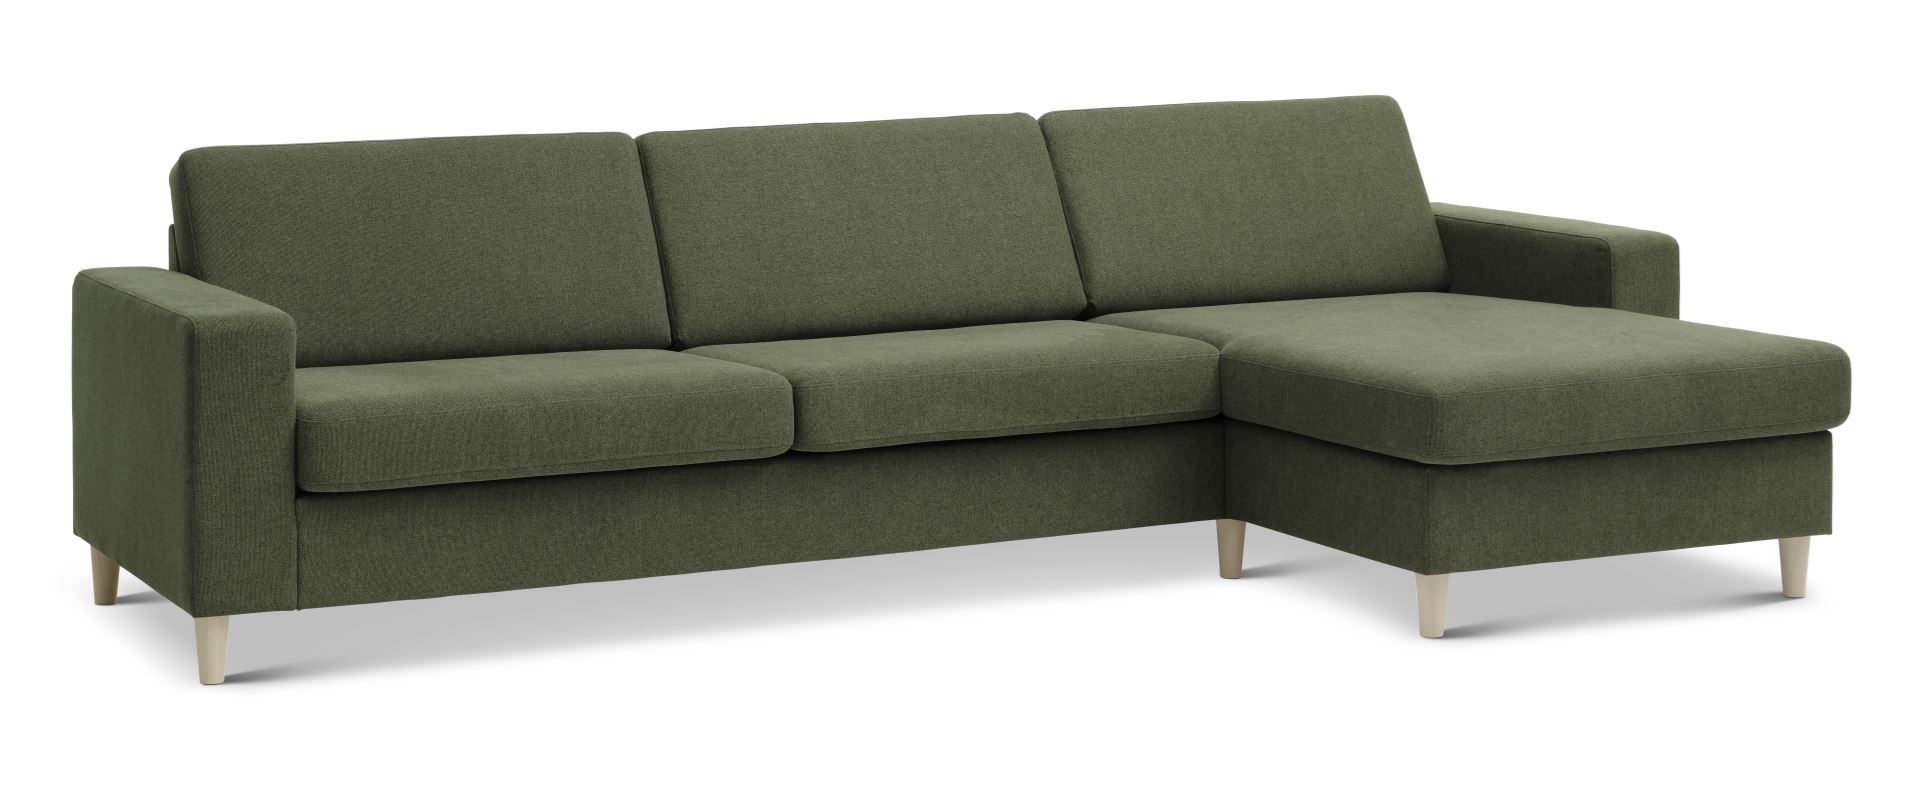 Pan set 8 3D XL sofa, m. chaiselong - vinter mosgrøn polyester stof og natur træ